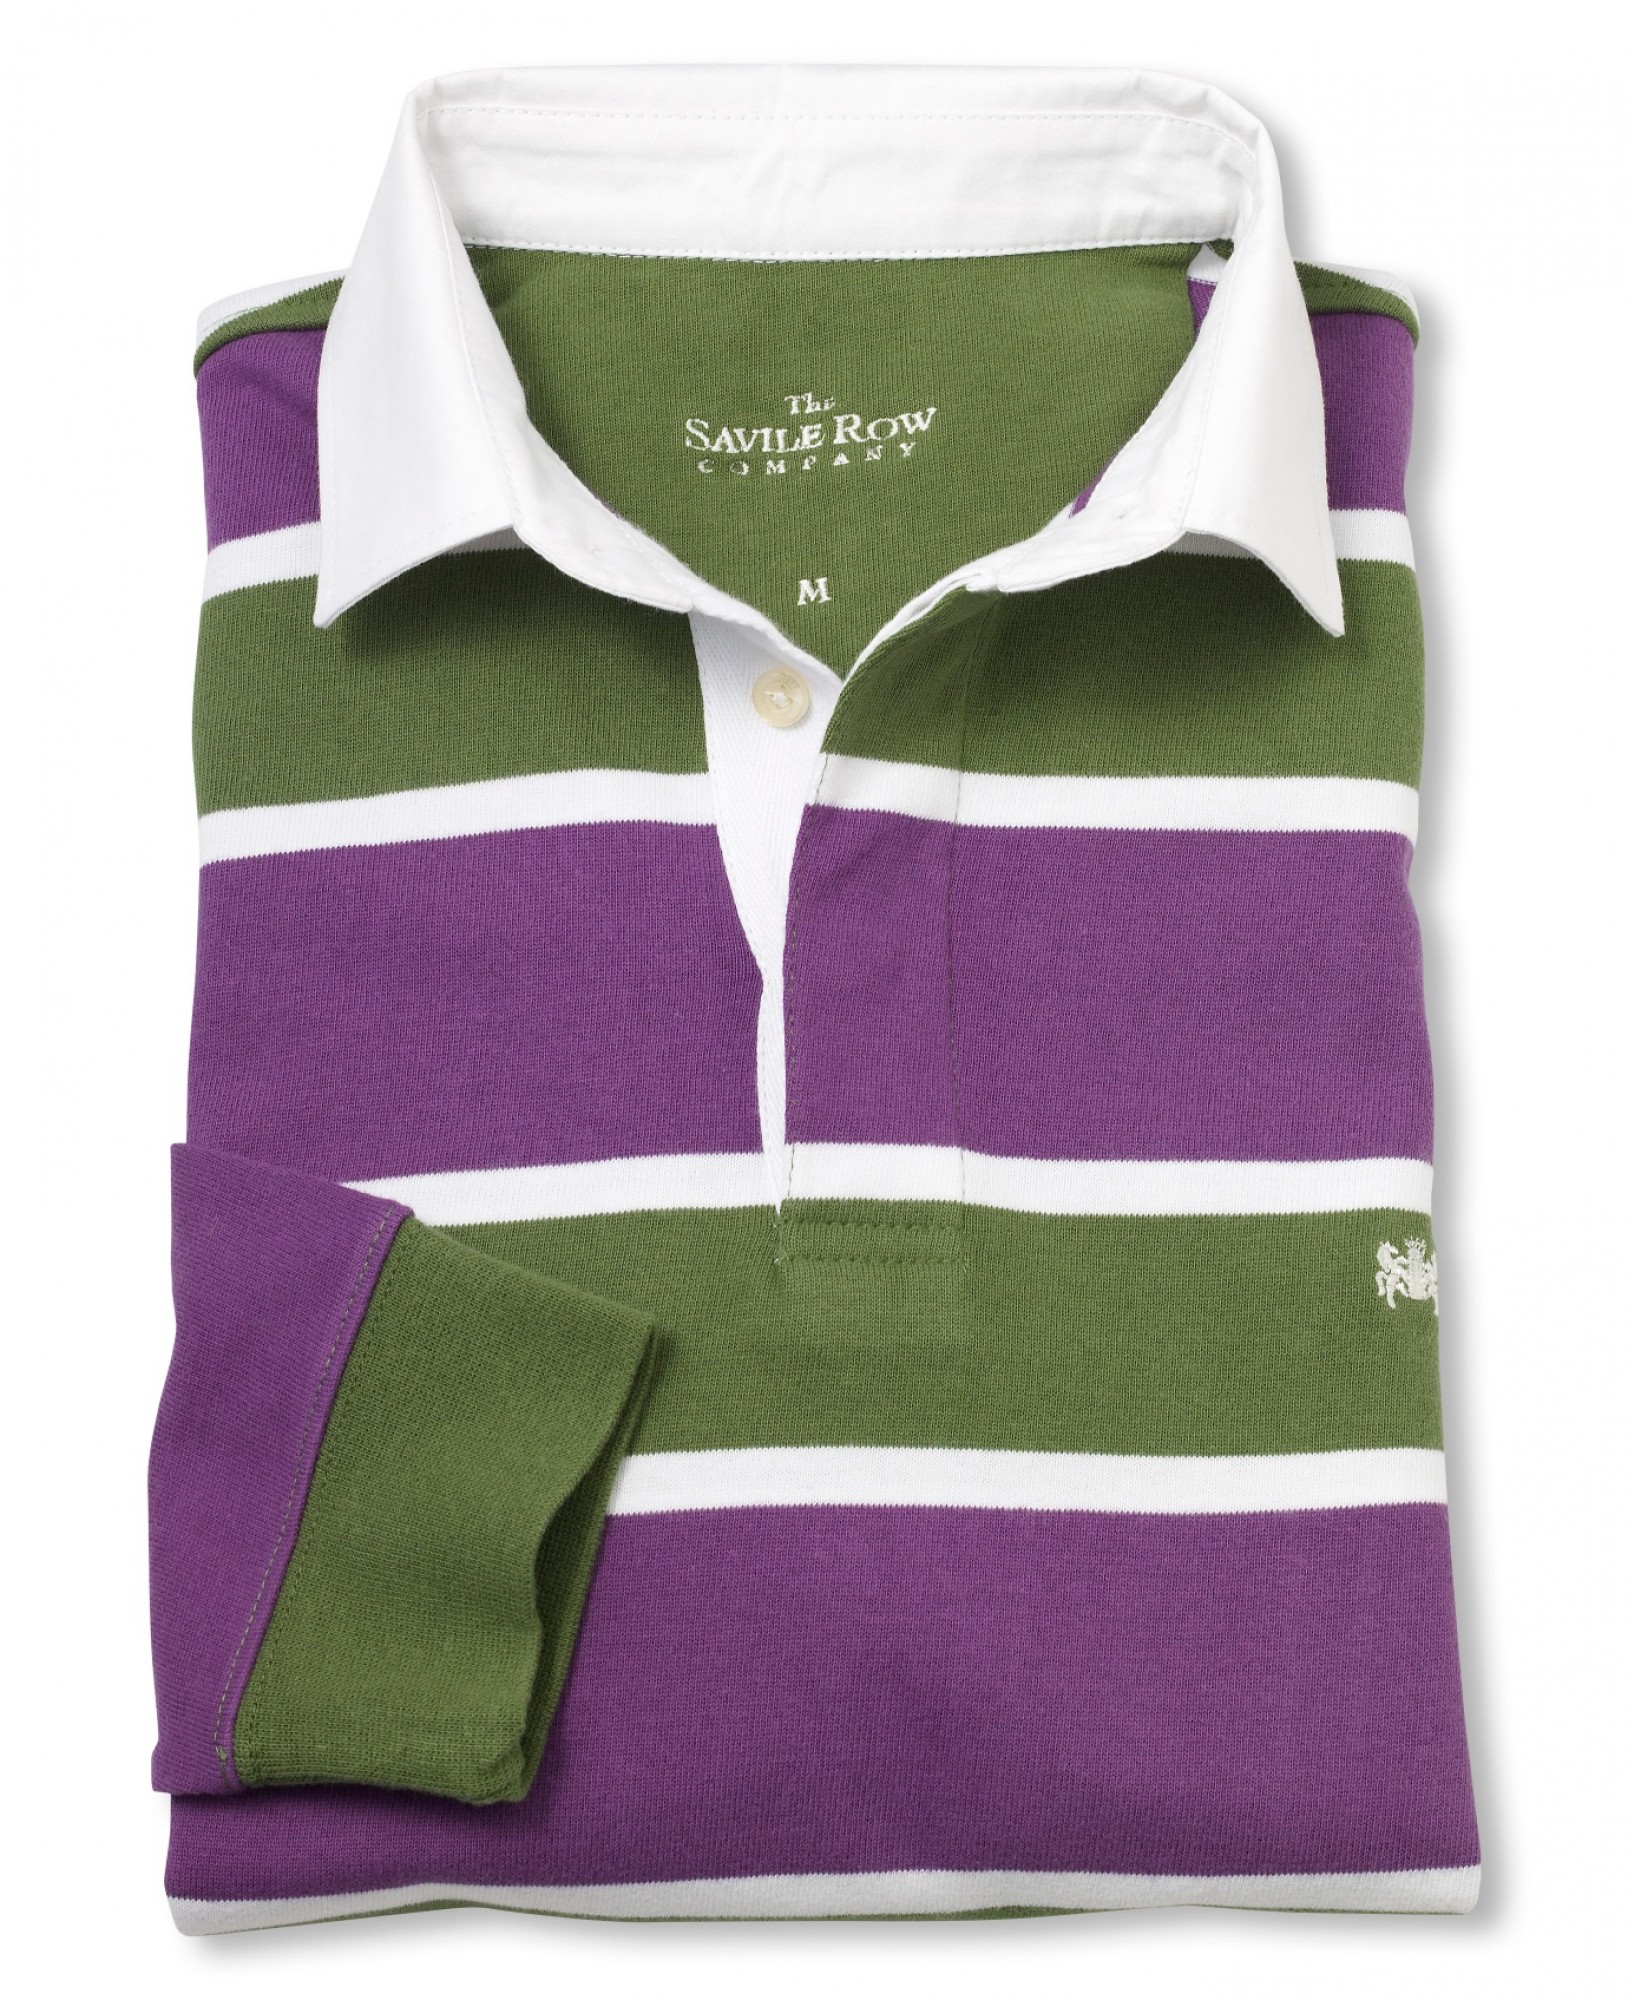 Savile Row Co. Purple White Green Stripe Rugby Shirt S